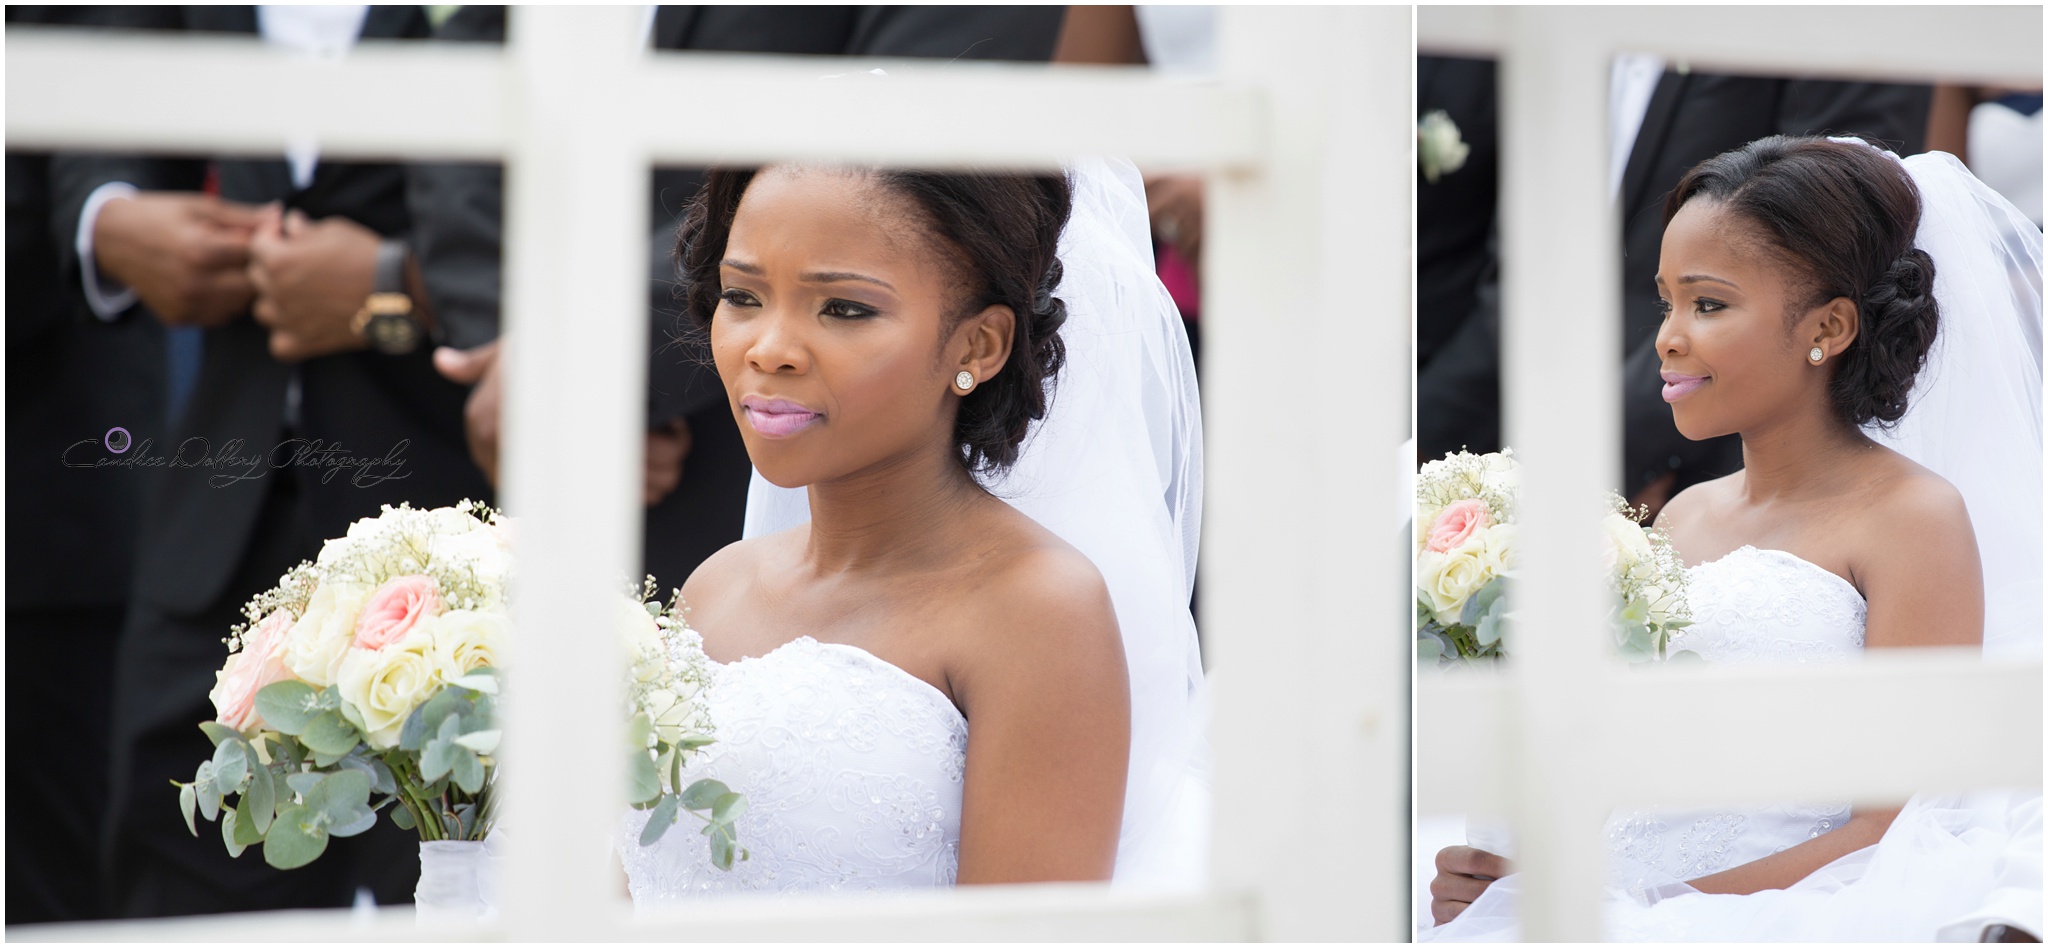 Asanda & Bonga's Wedding - Candice Dollery Photography_8204